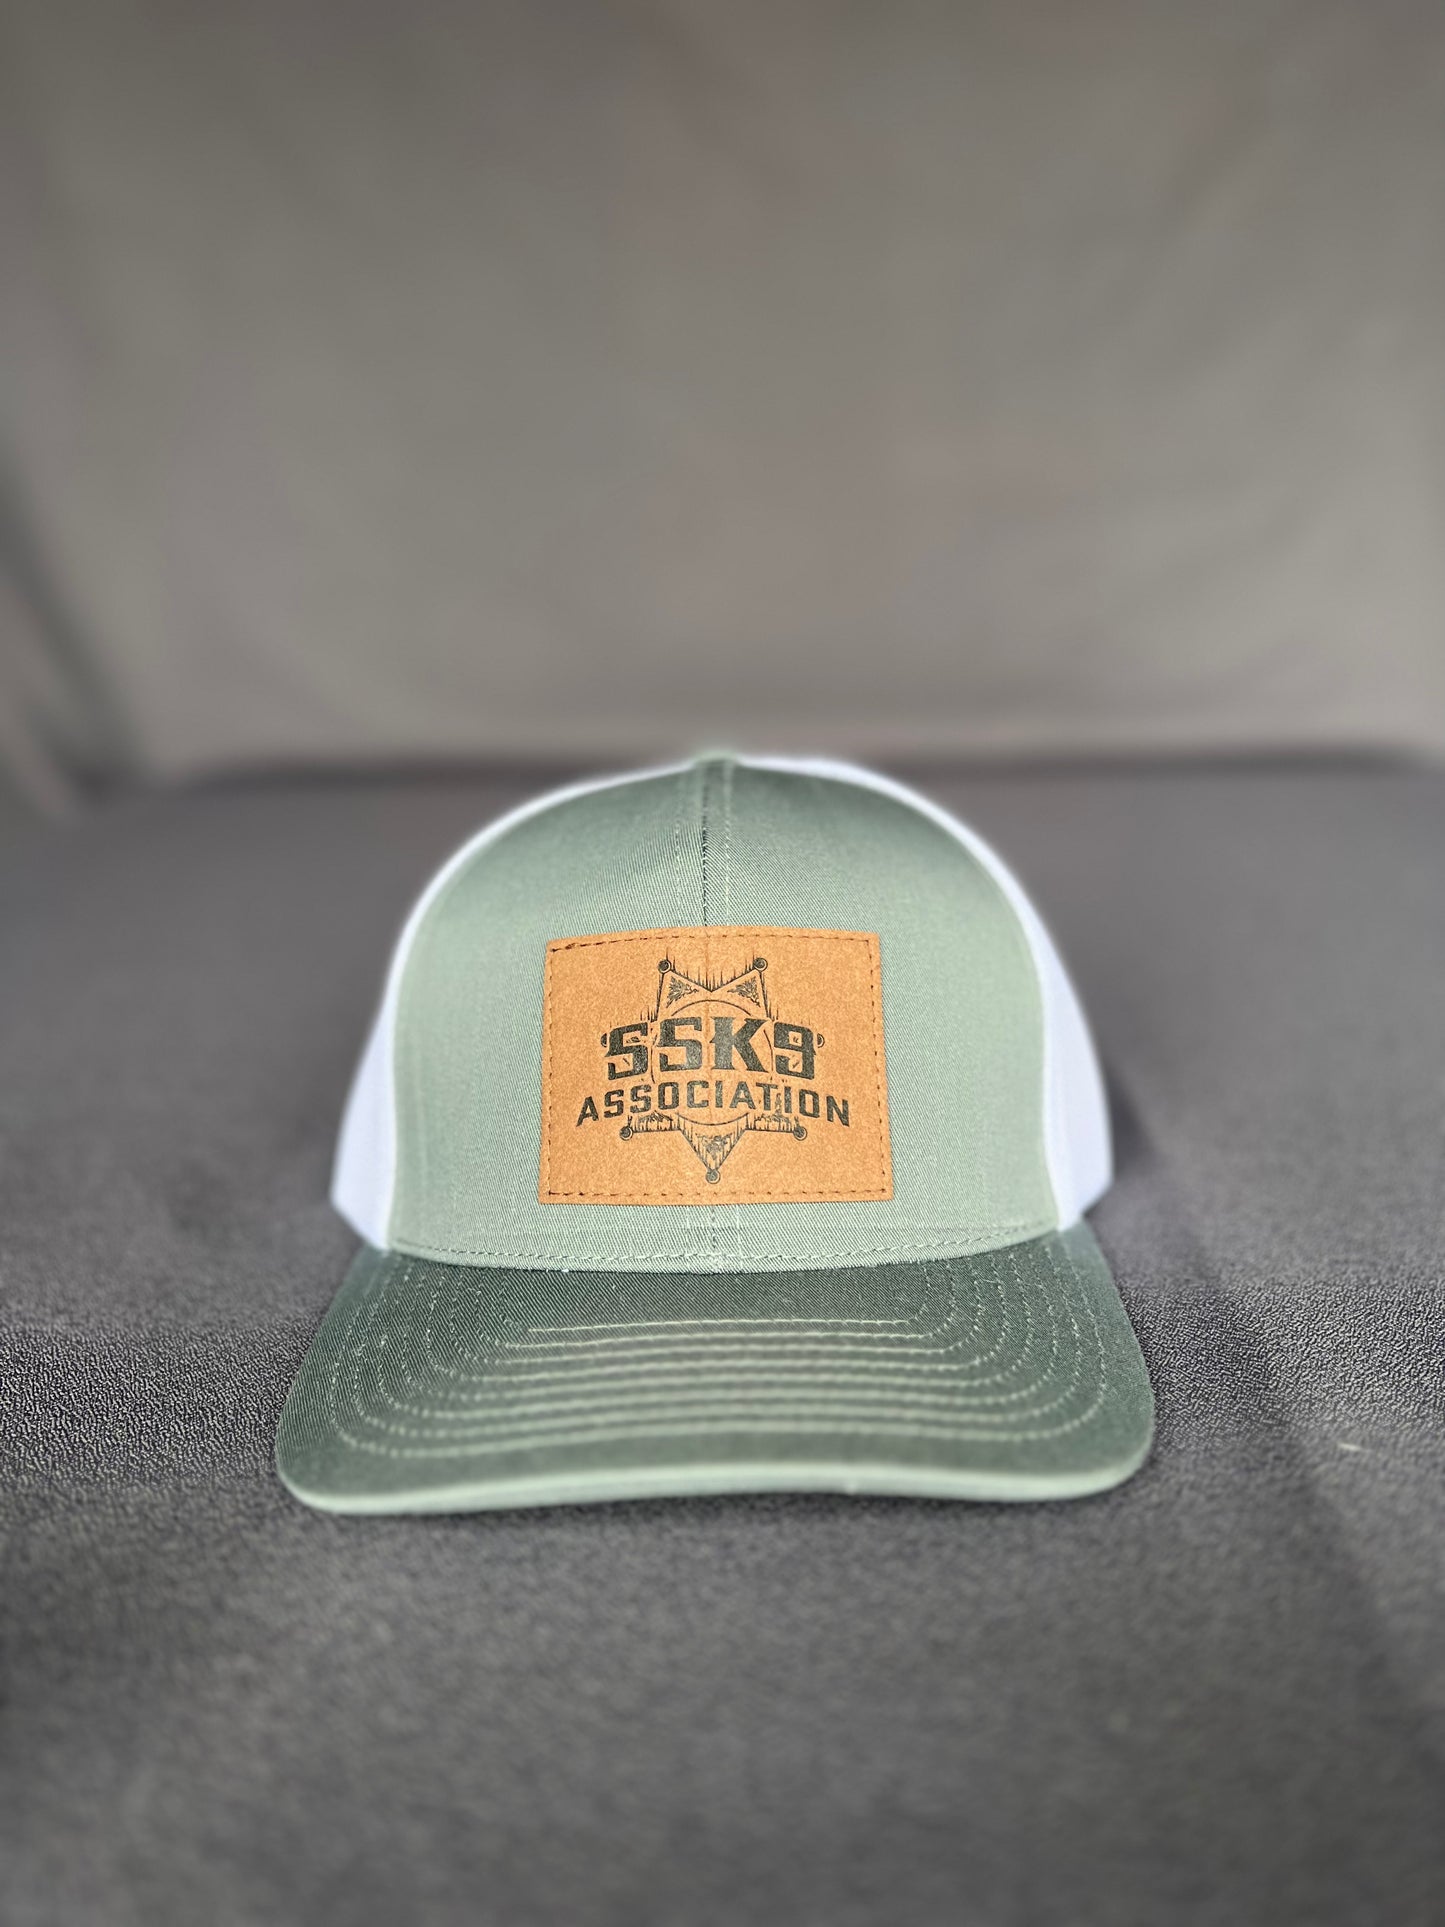 Hat: SSK9 Association Gray